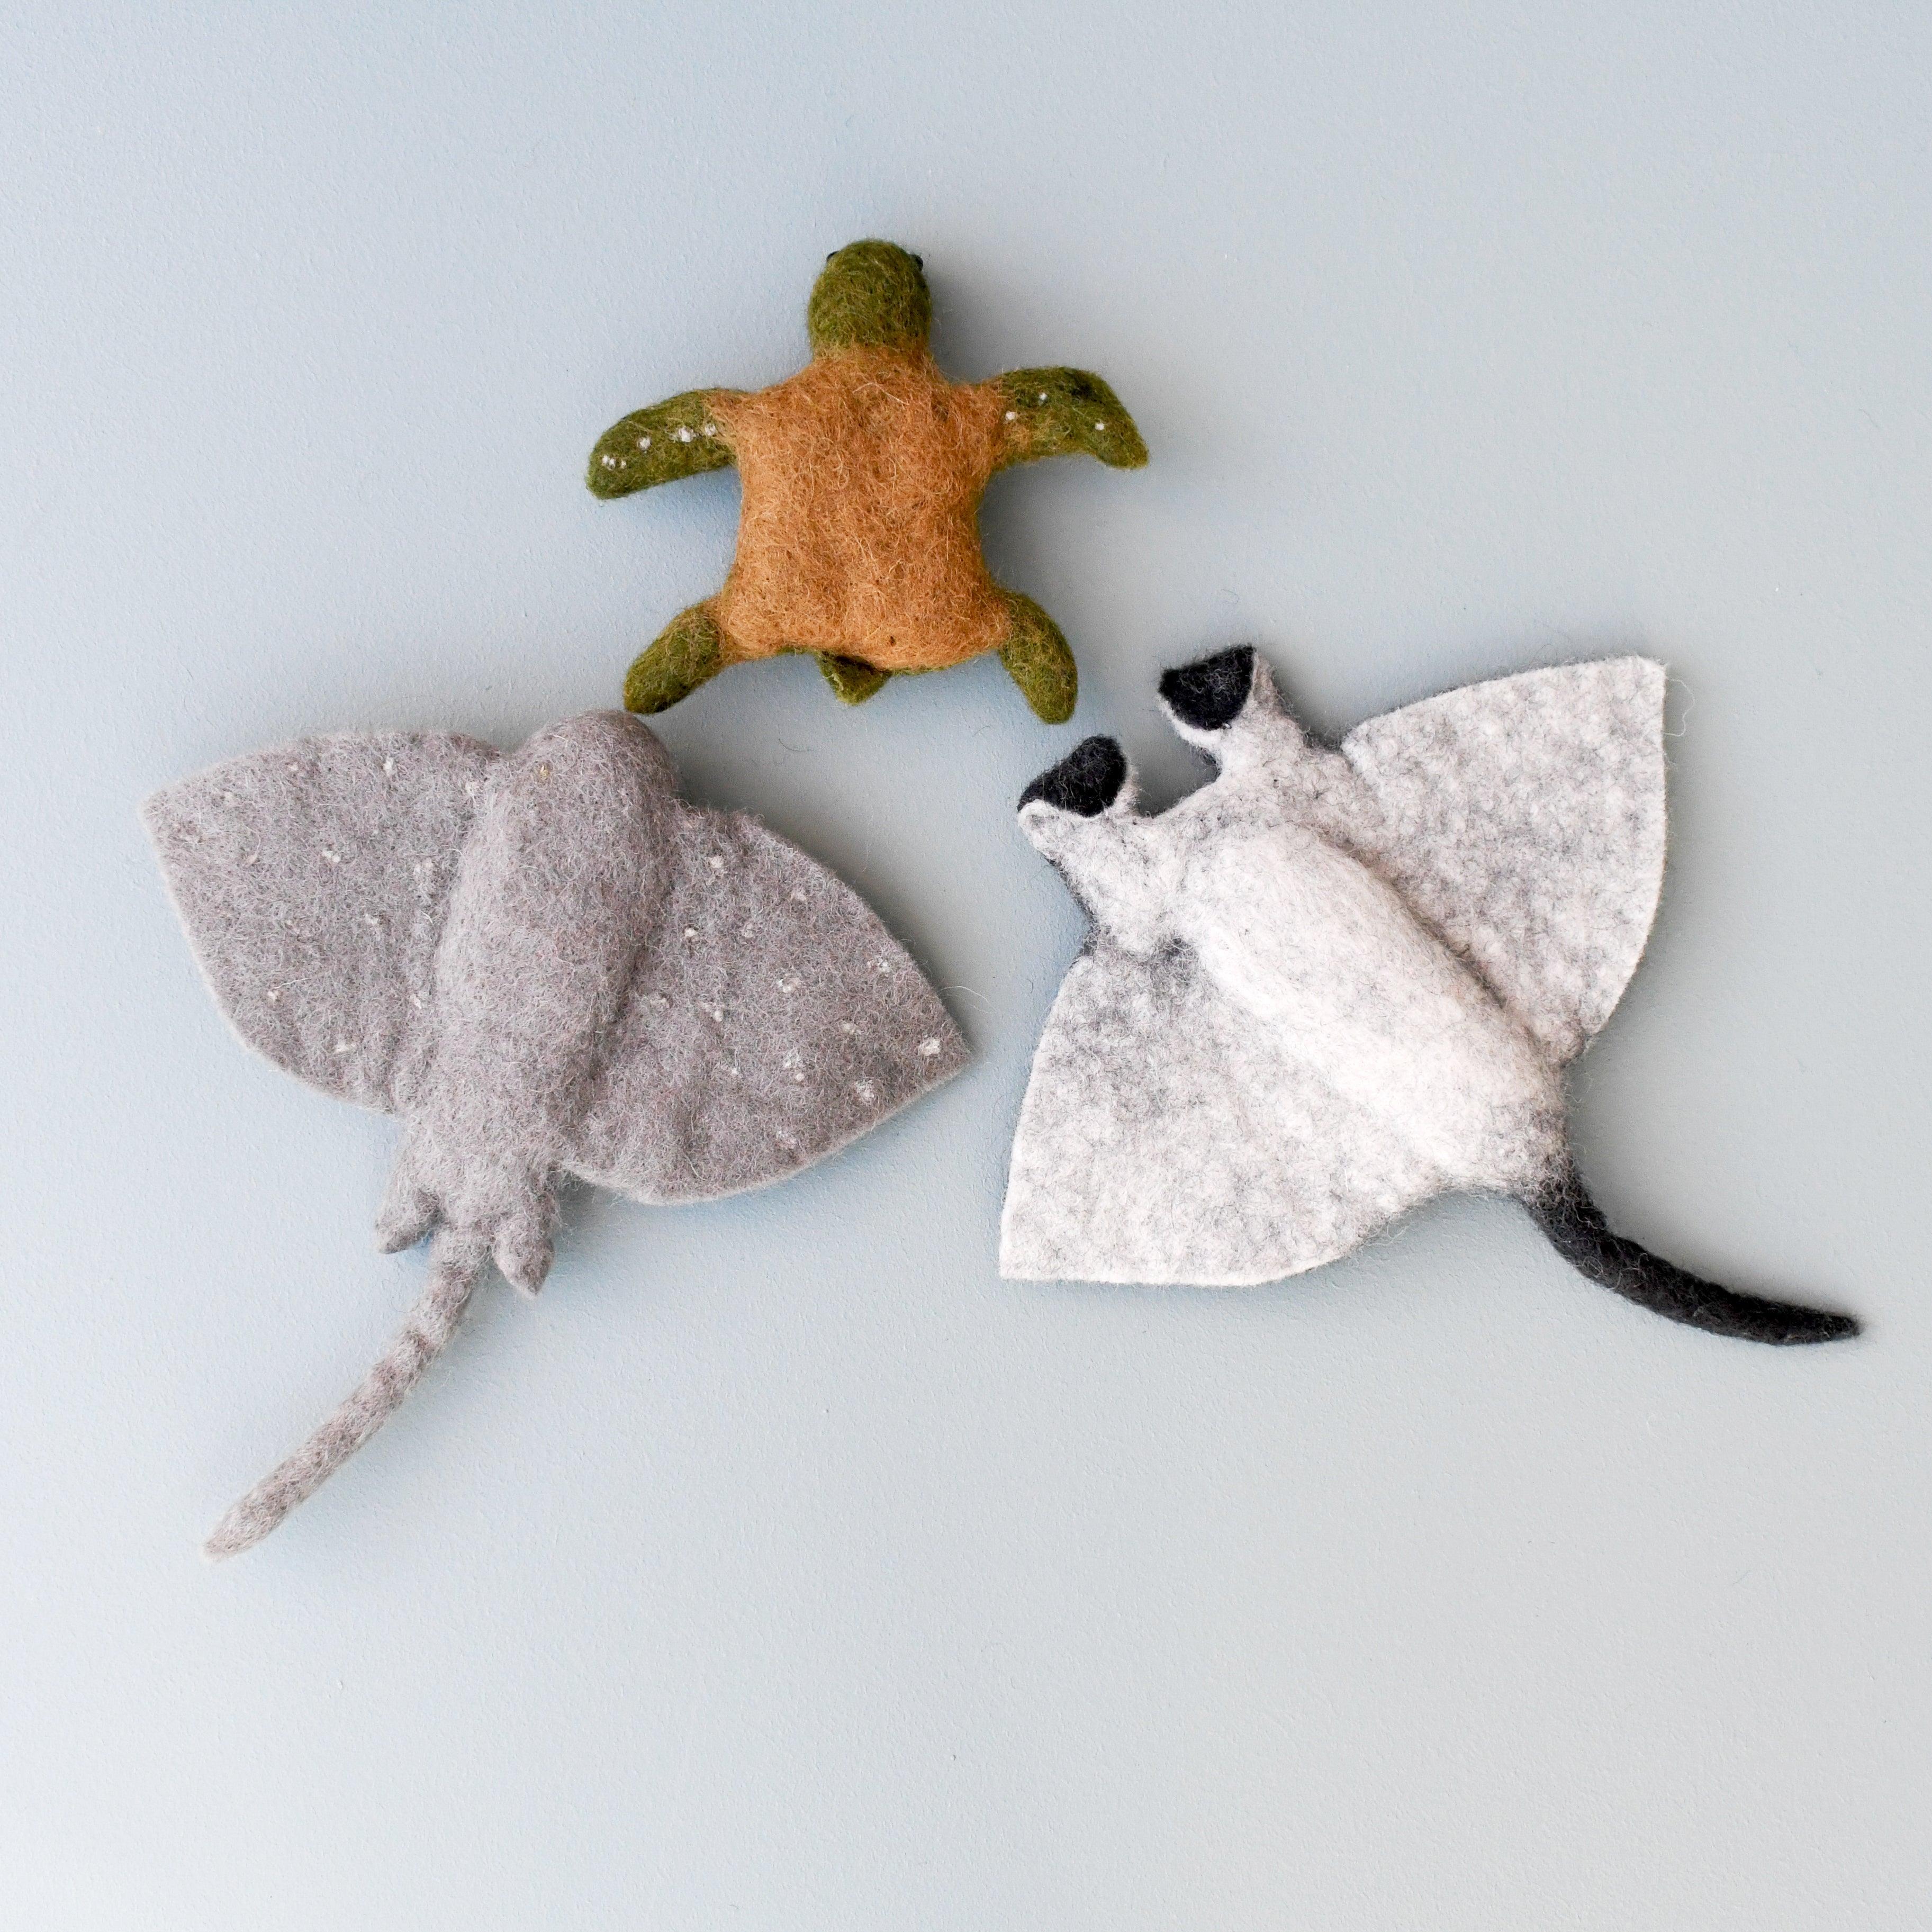 Felt Sea Reef Creatures Toys - Manta Ray, Eagle Ray and Green Sea Turtle - Tara Treasures